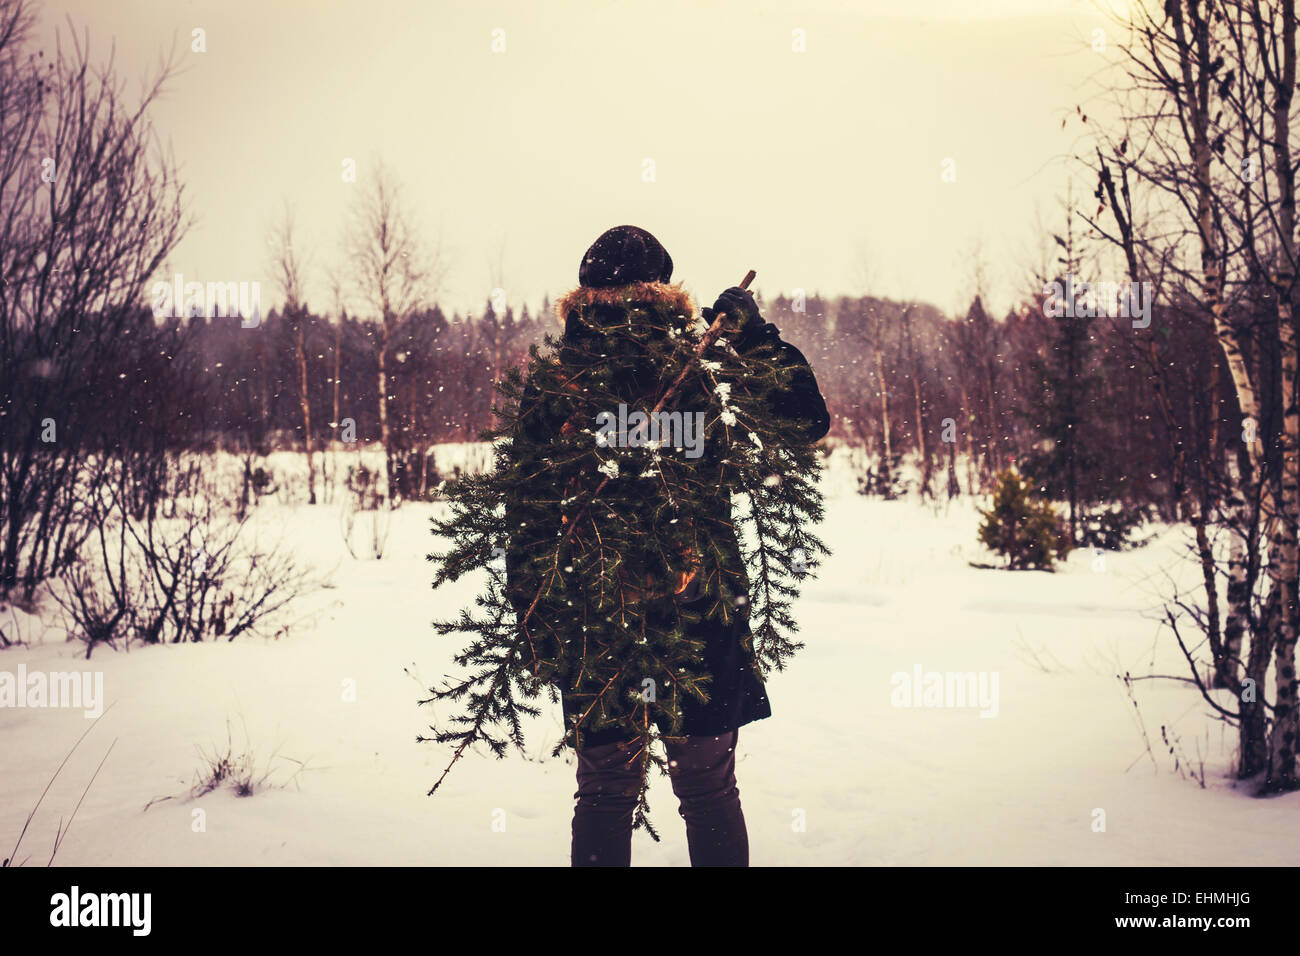 Caucasian man carrying tree in snowy field Stock Photo